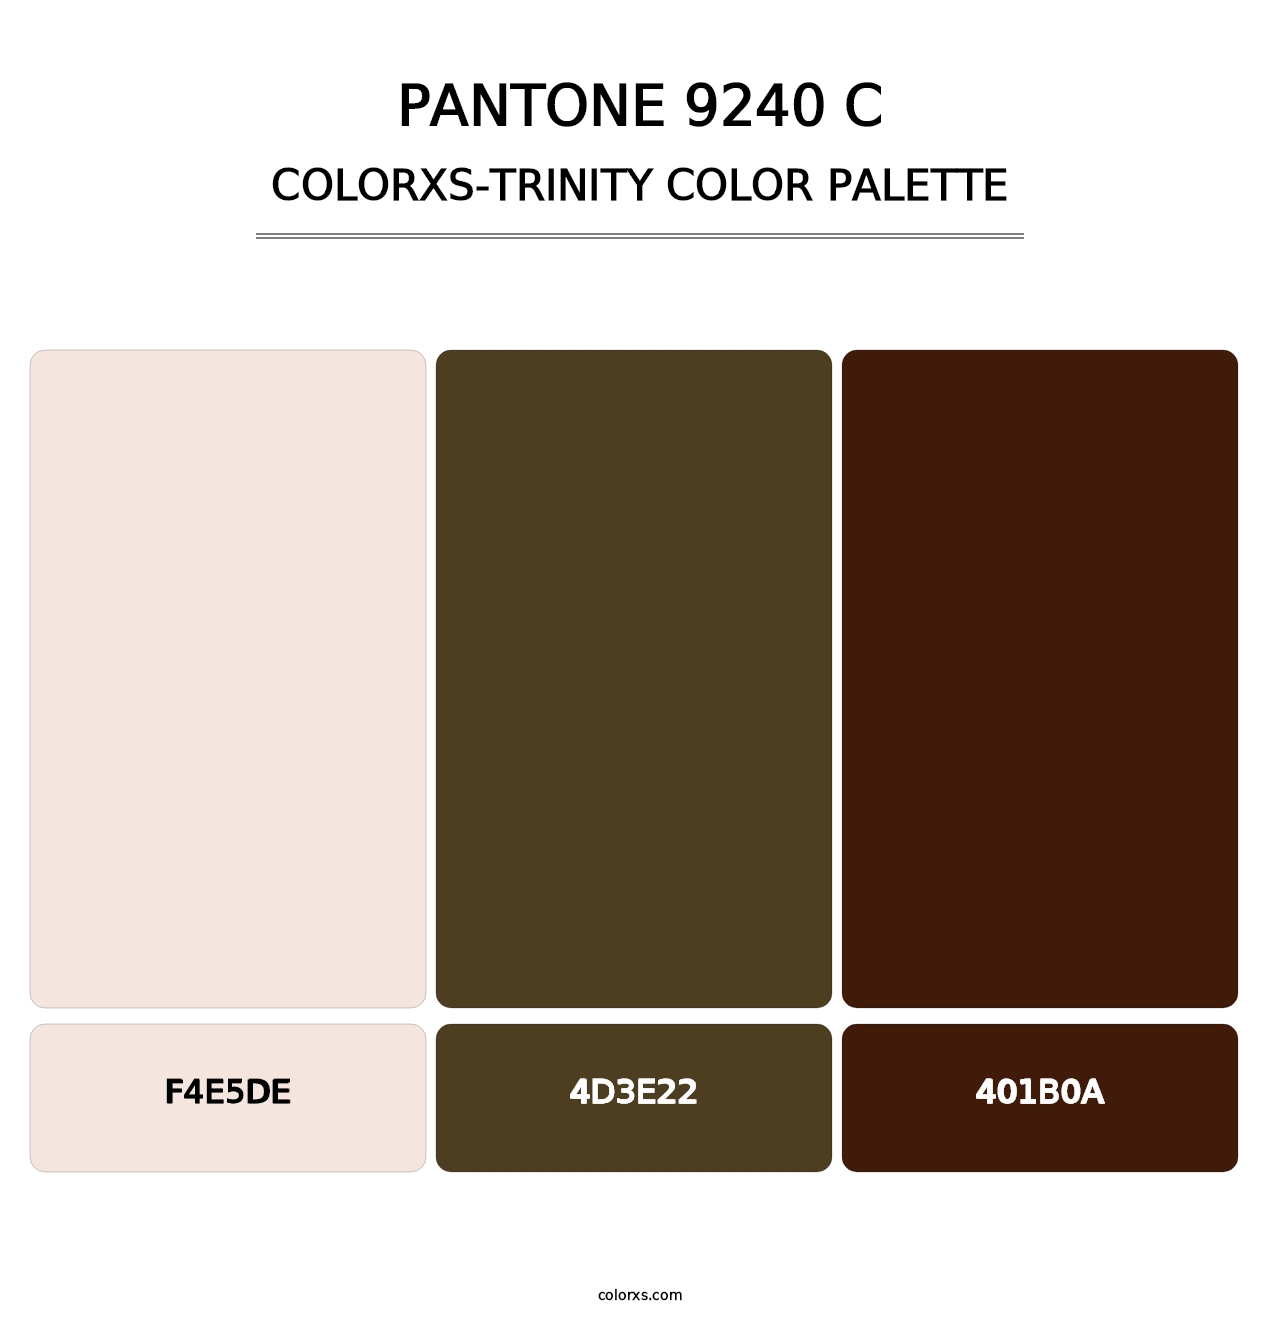 PANTONE 9240 C - Colorxs Trinity Palette